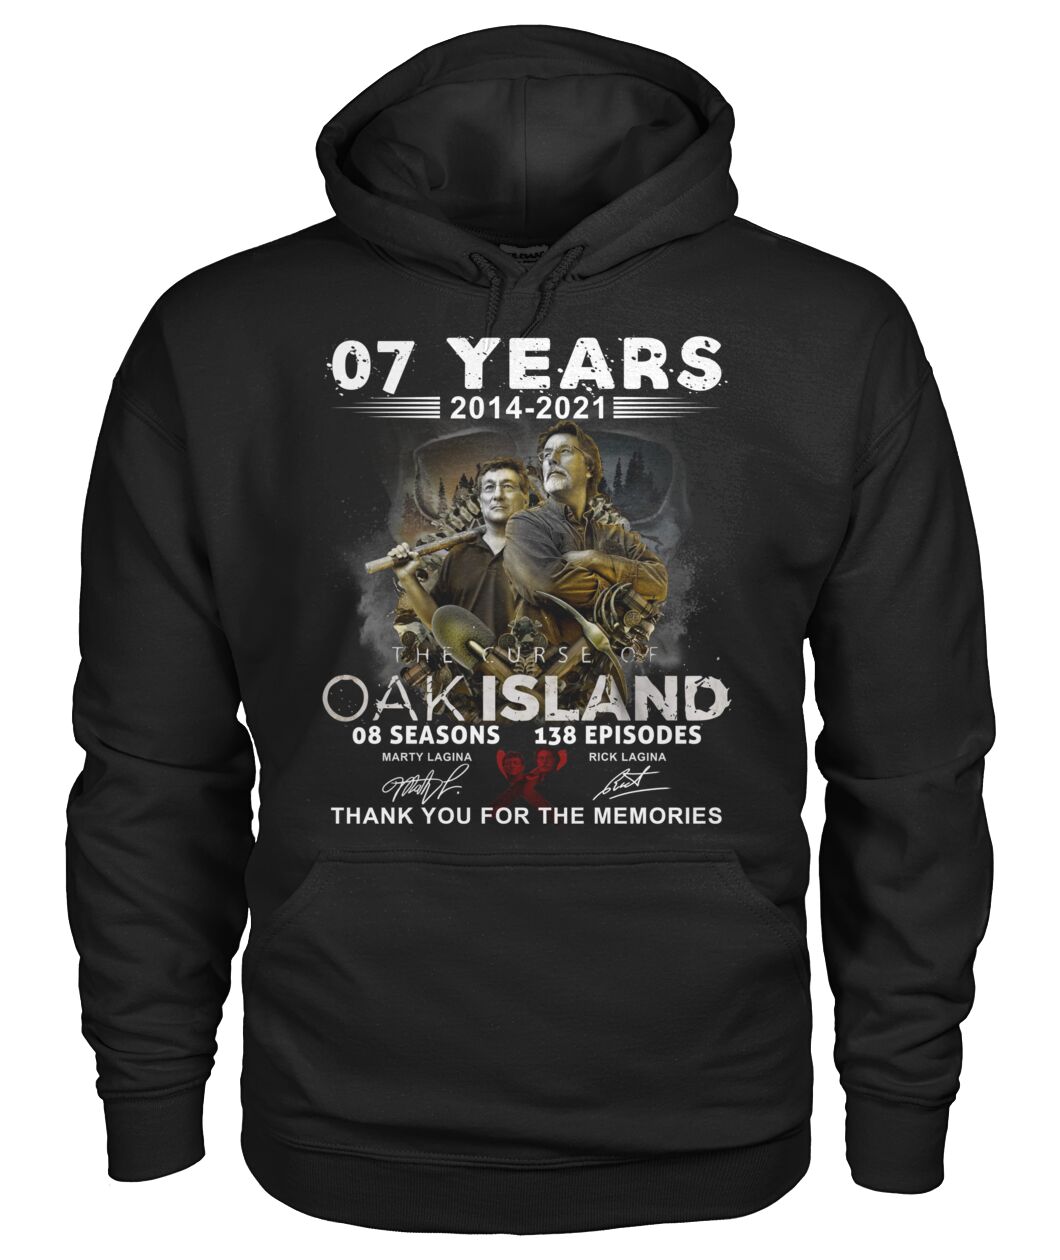 07 years 2014 2021 OAK island 08 seasons thank you for memories shirt 11